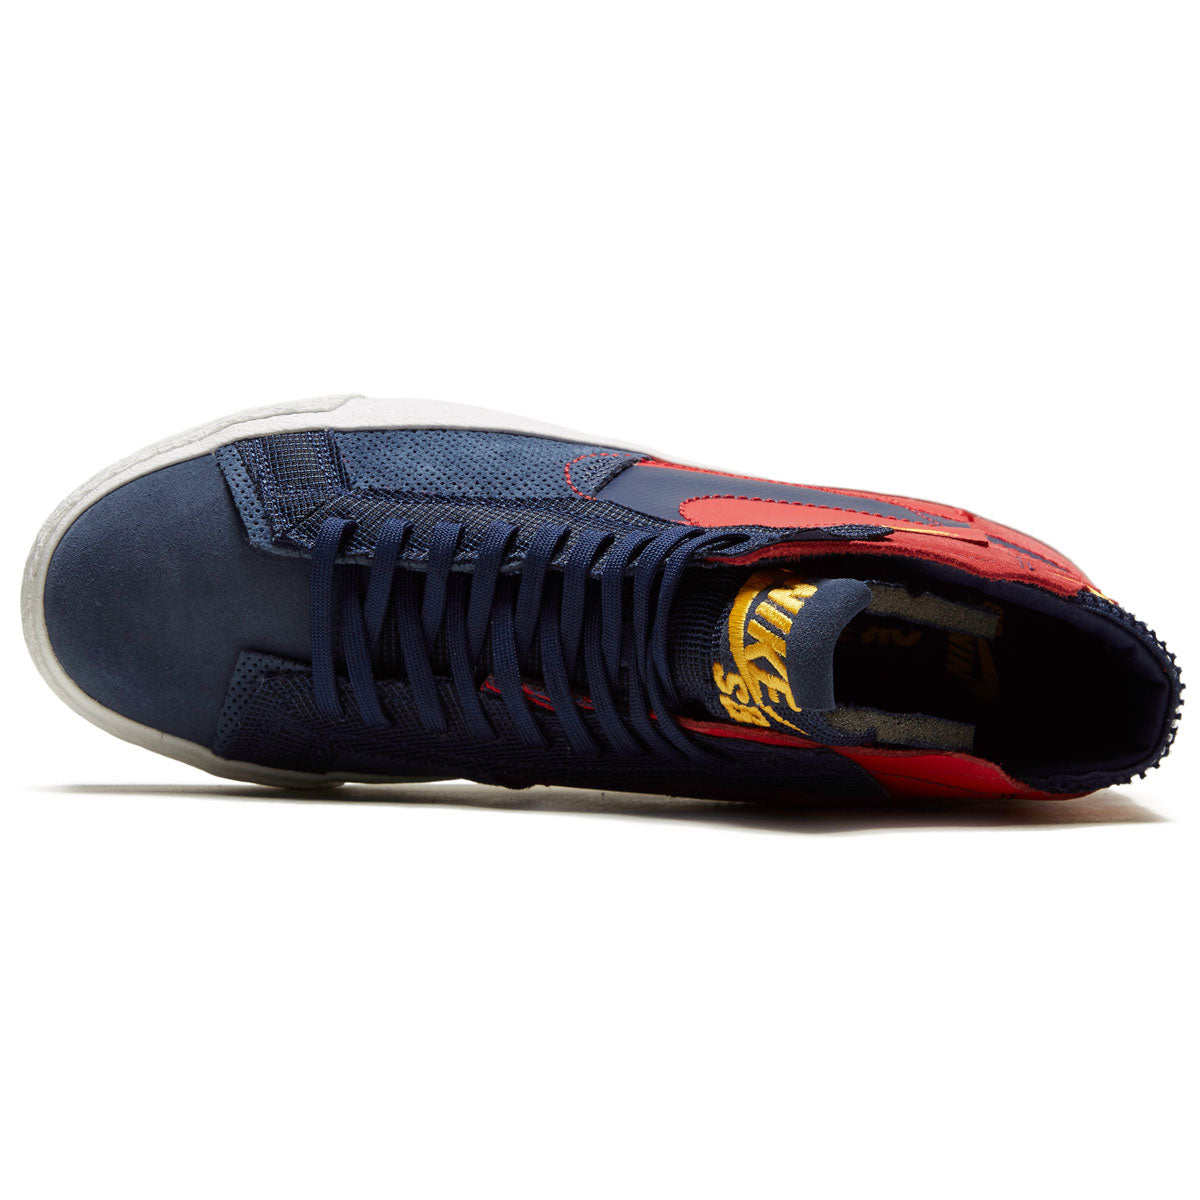 Nike SB Zoom Blazer Mid Prm Shoes - University Red/Midnight Navy image 3